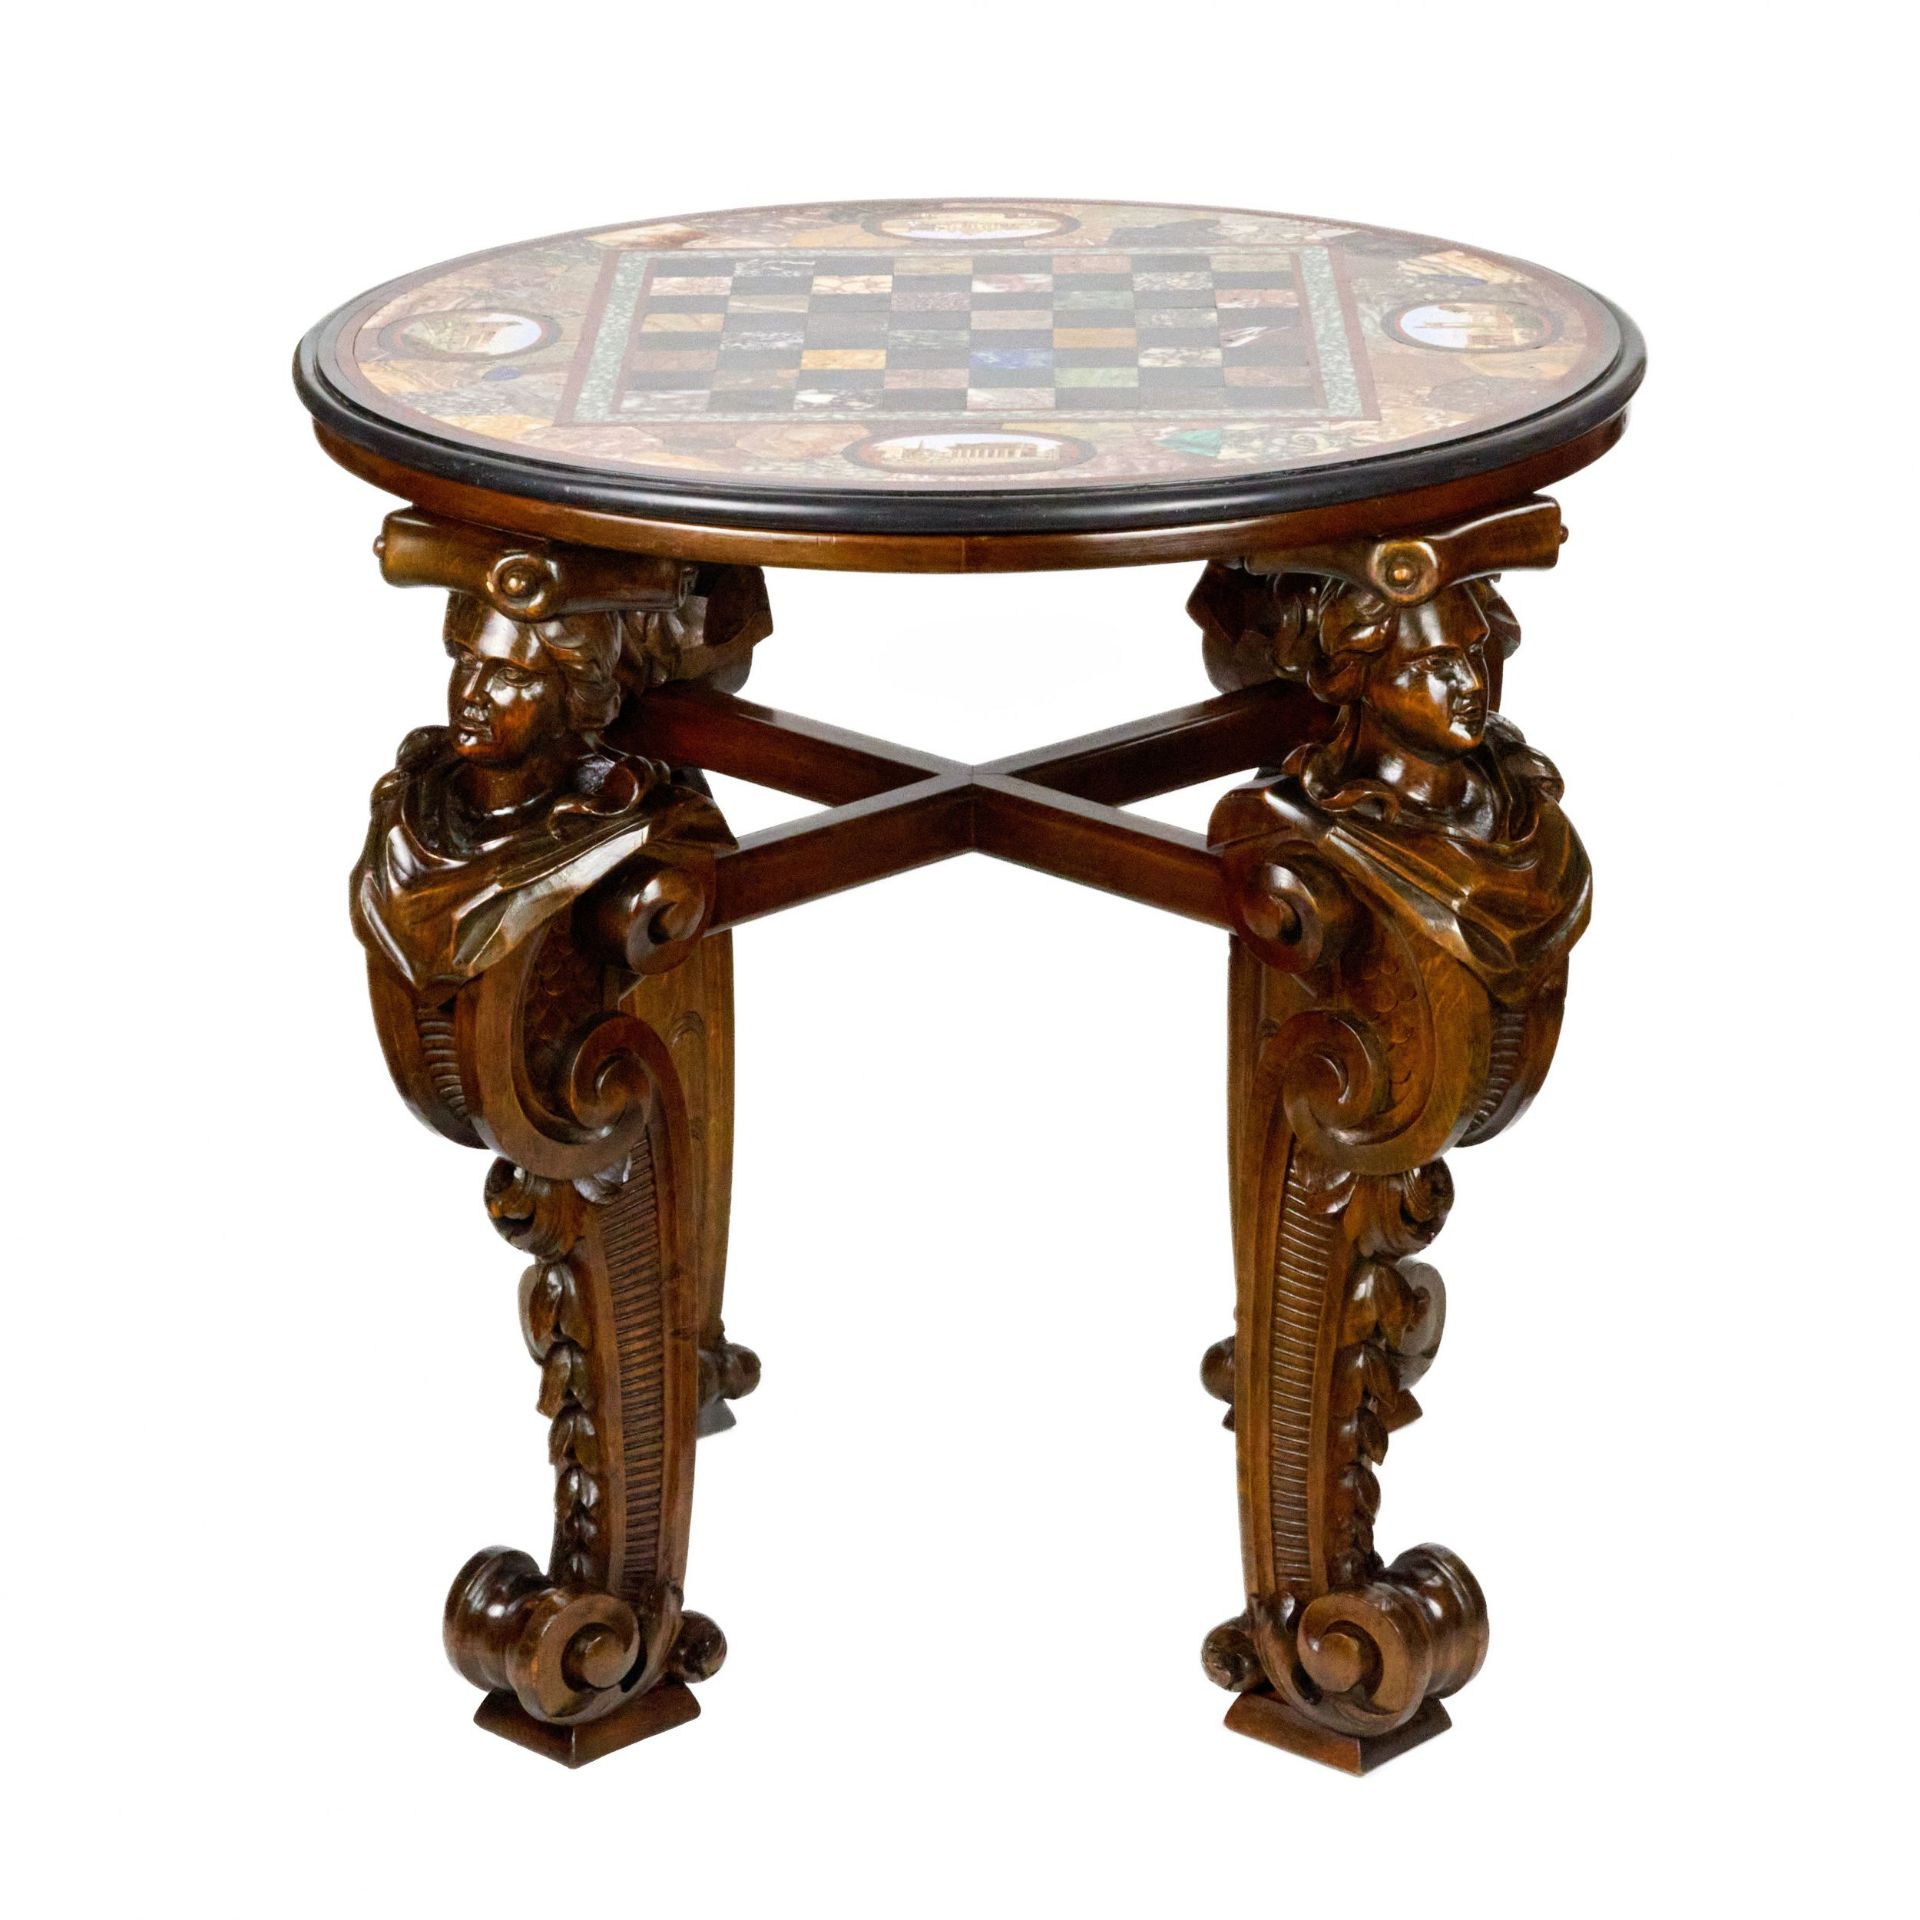 Impressive chess table with precious Roman mosaics on carved legs. - Bild 2 aus 10